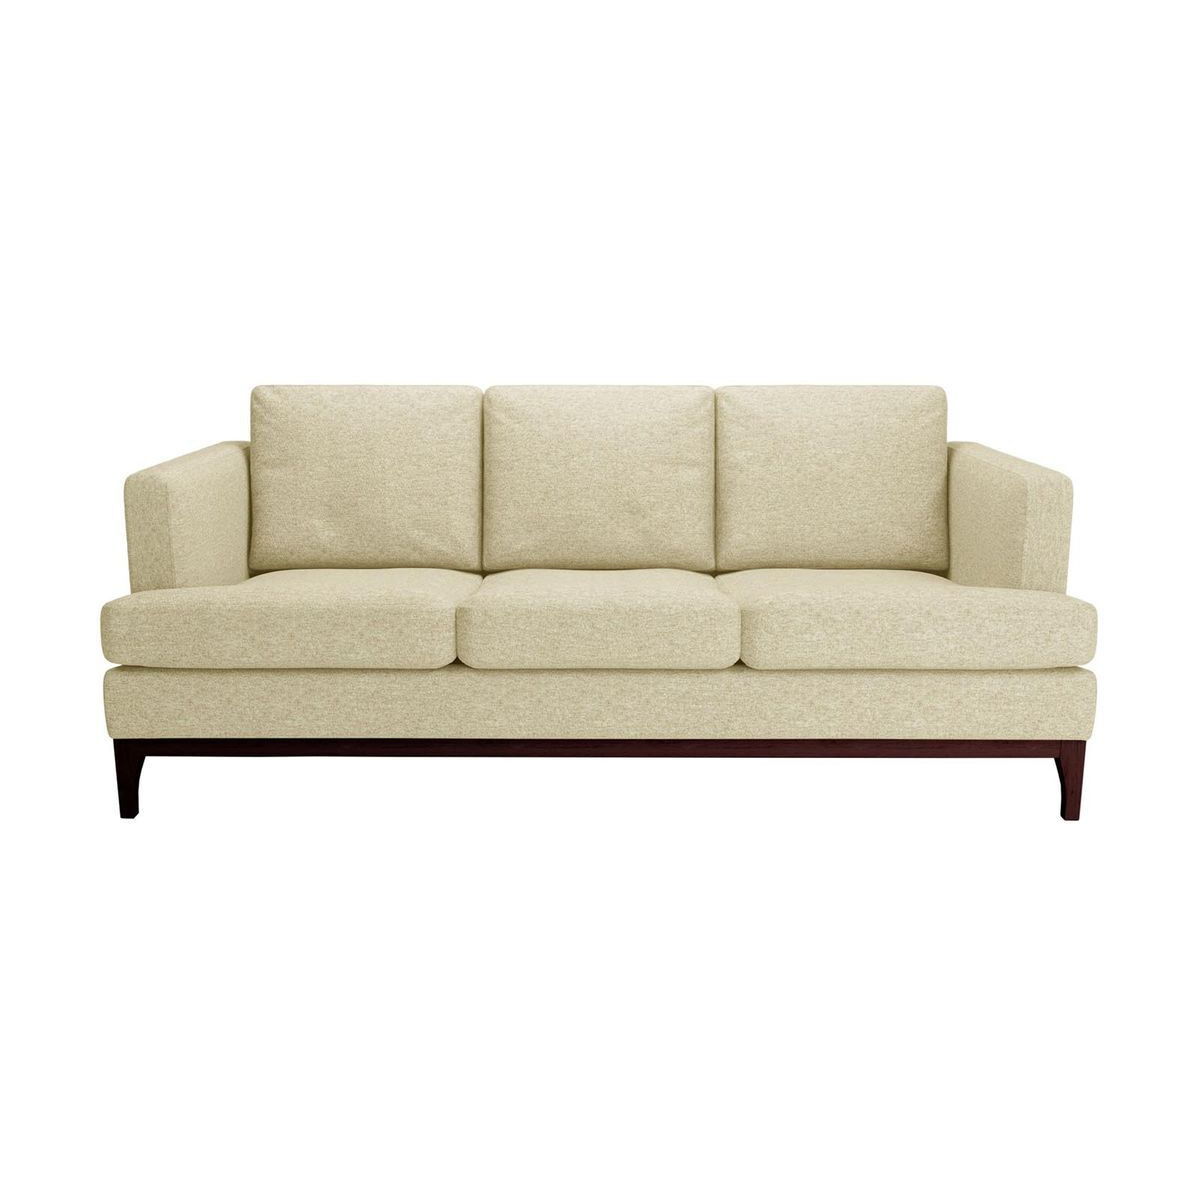 Scarlett 3 Seater Sofa, cream, Leg colour: dark oak - image 1